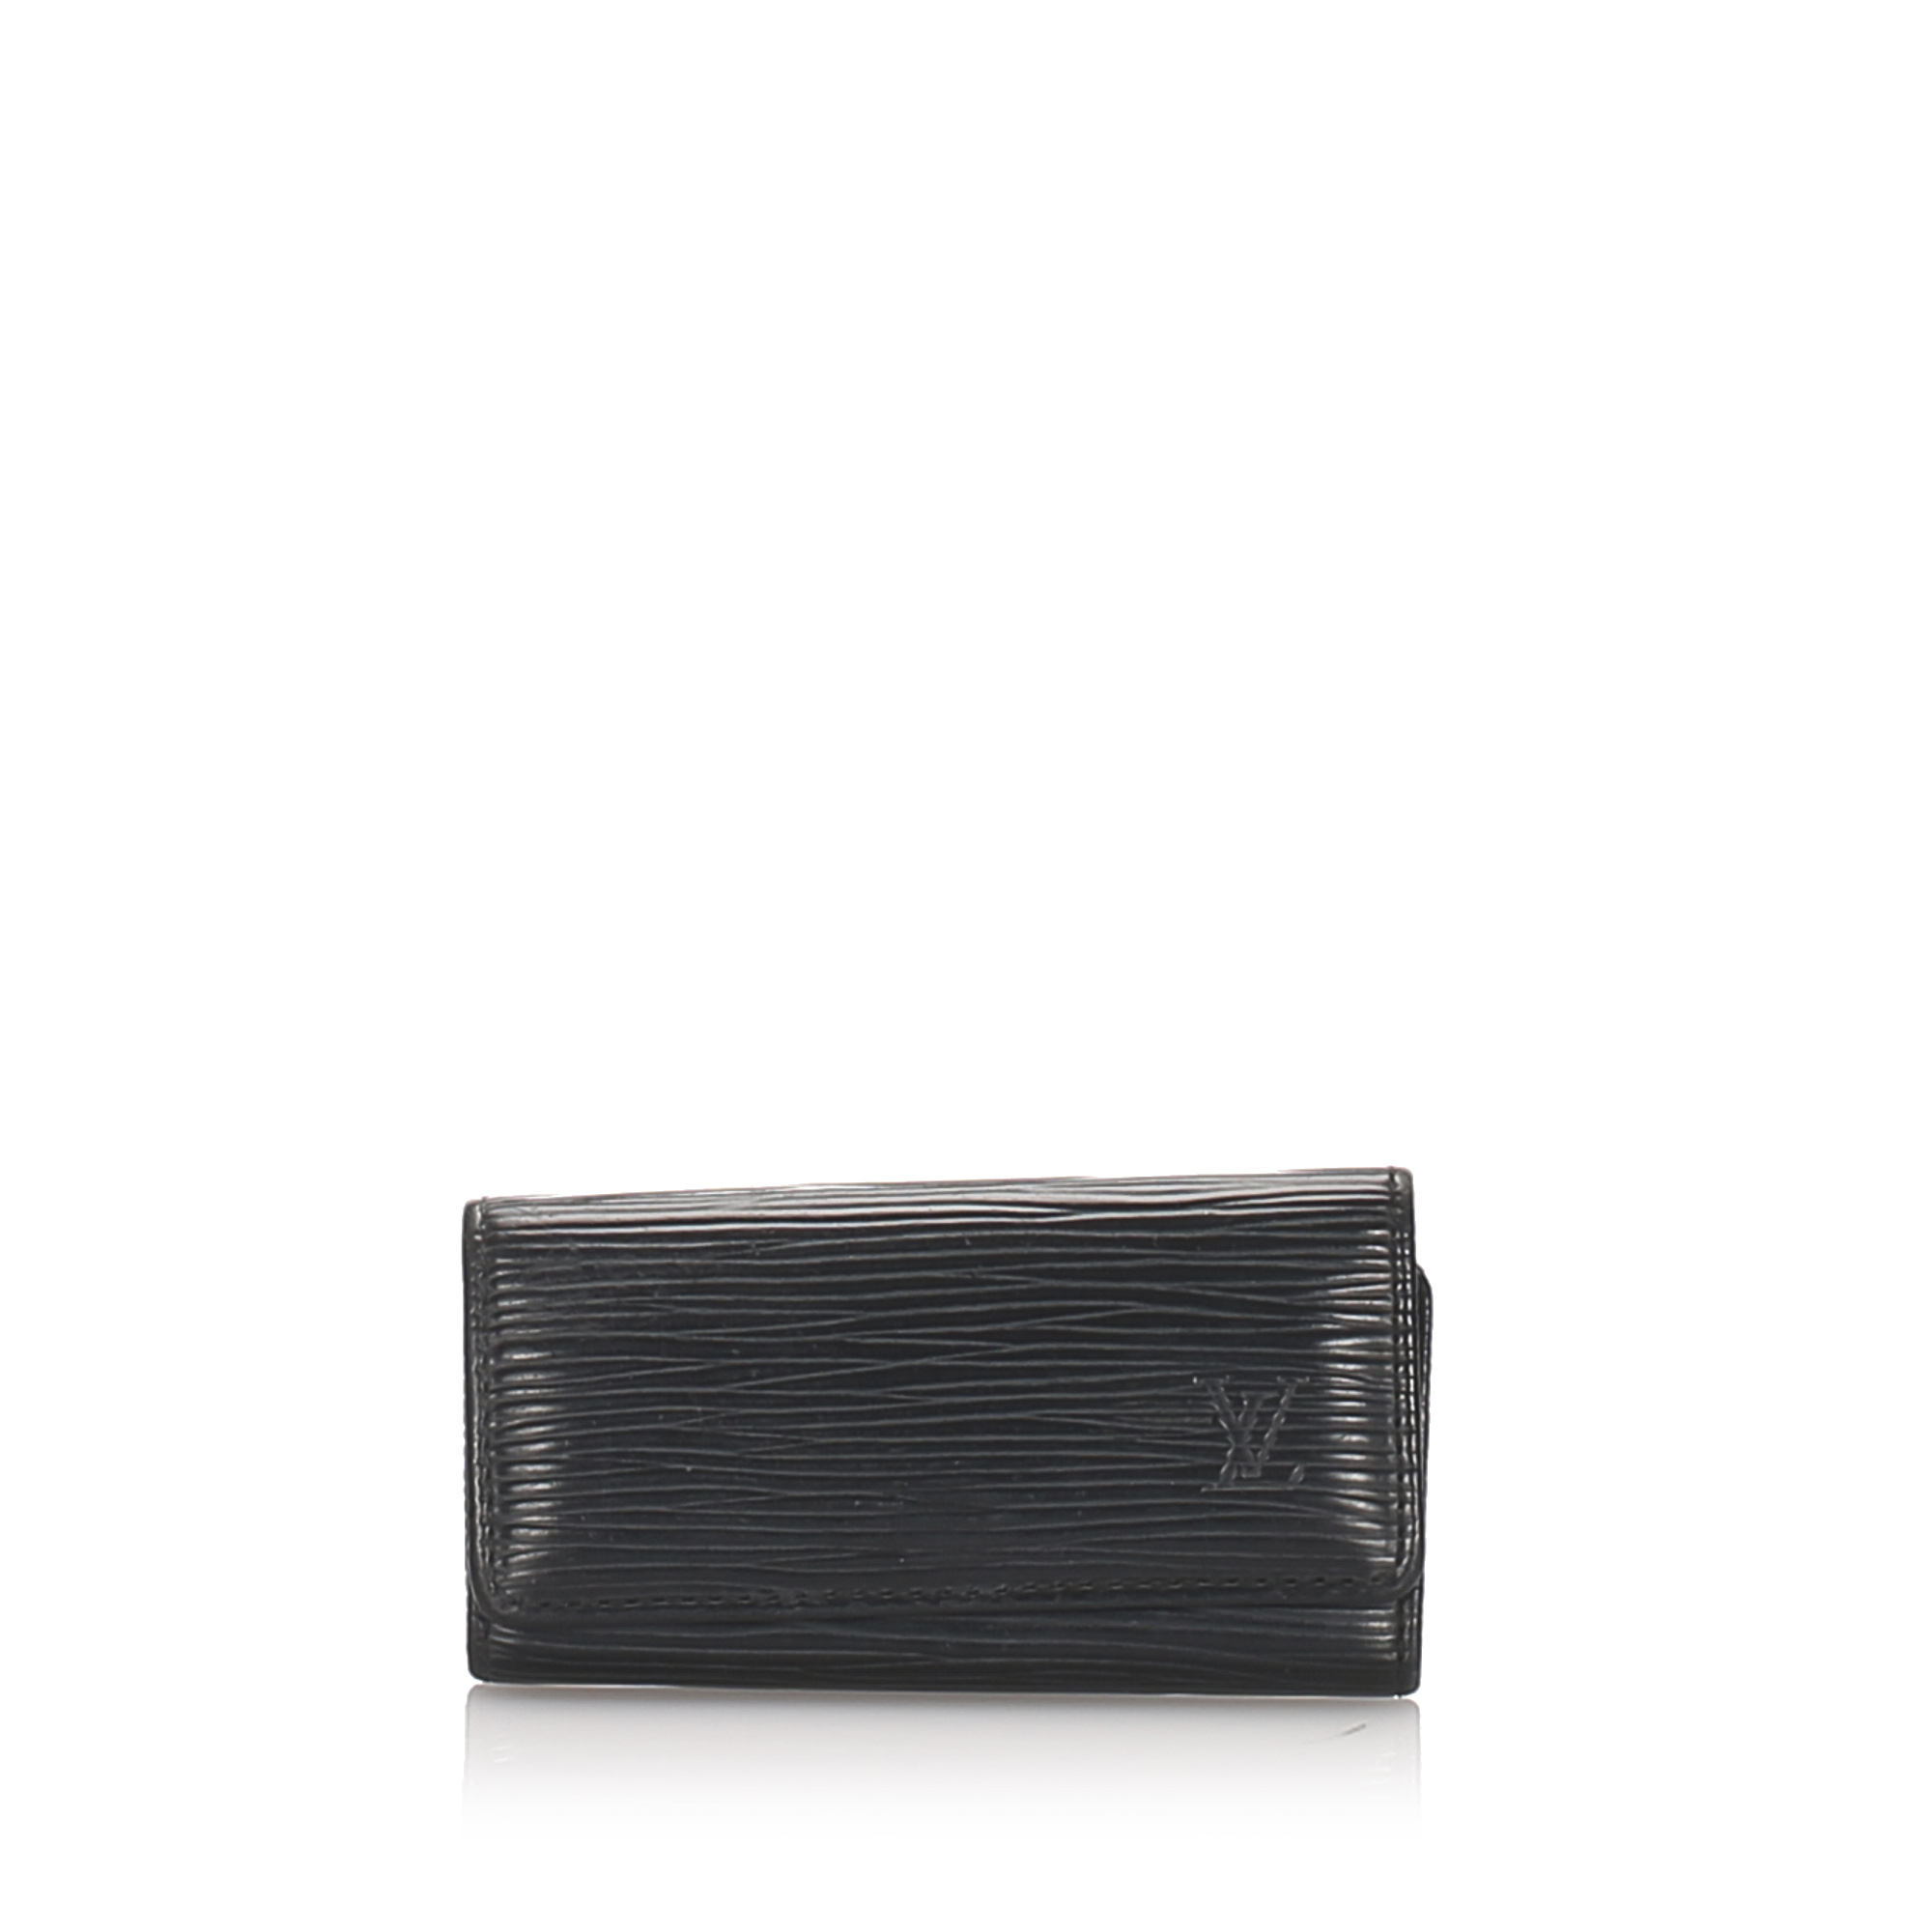 Pre-Loved Louis Vuitton Black Epi Leather Key Holder Spain | eBay